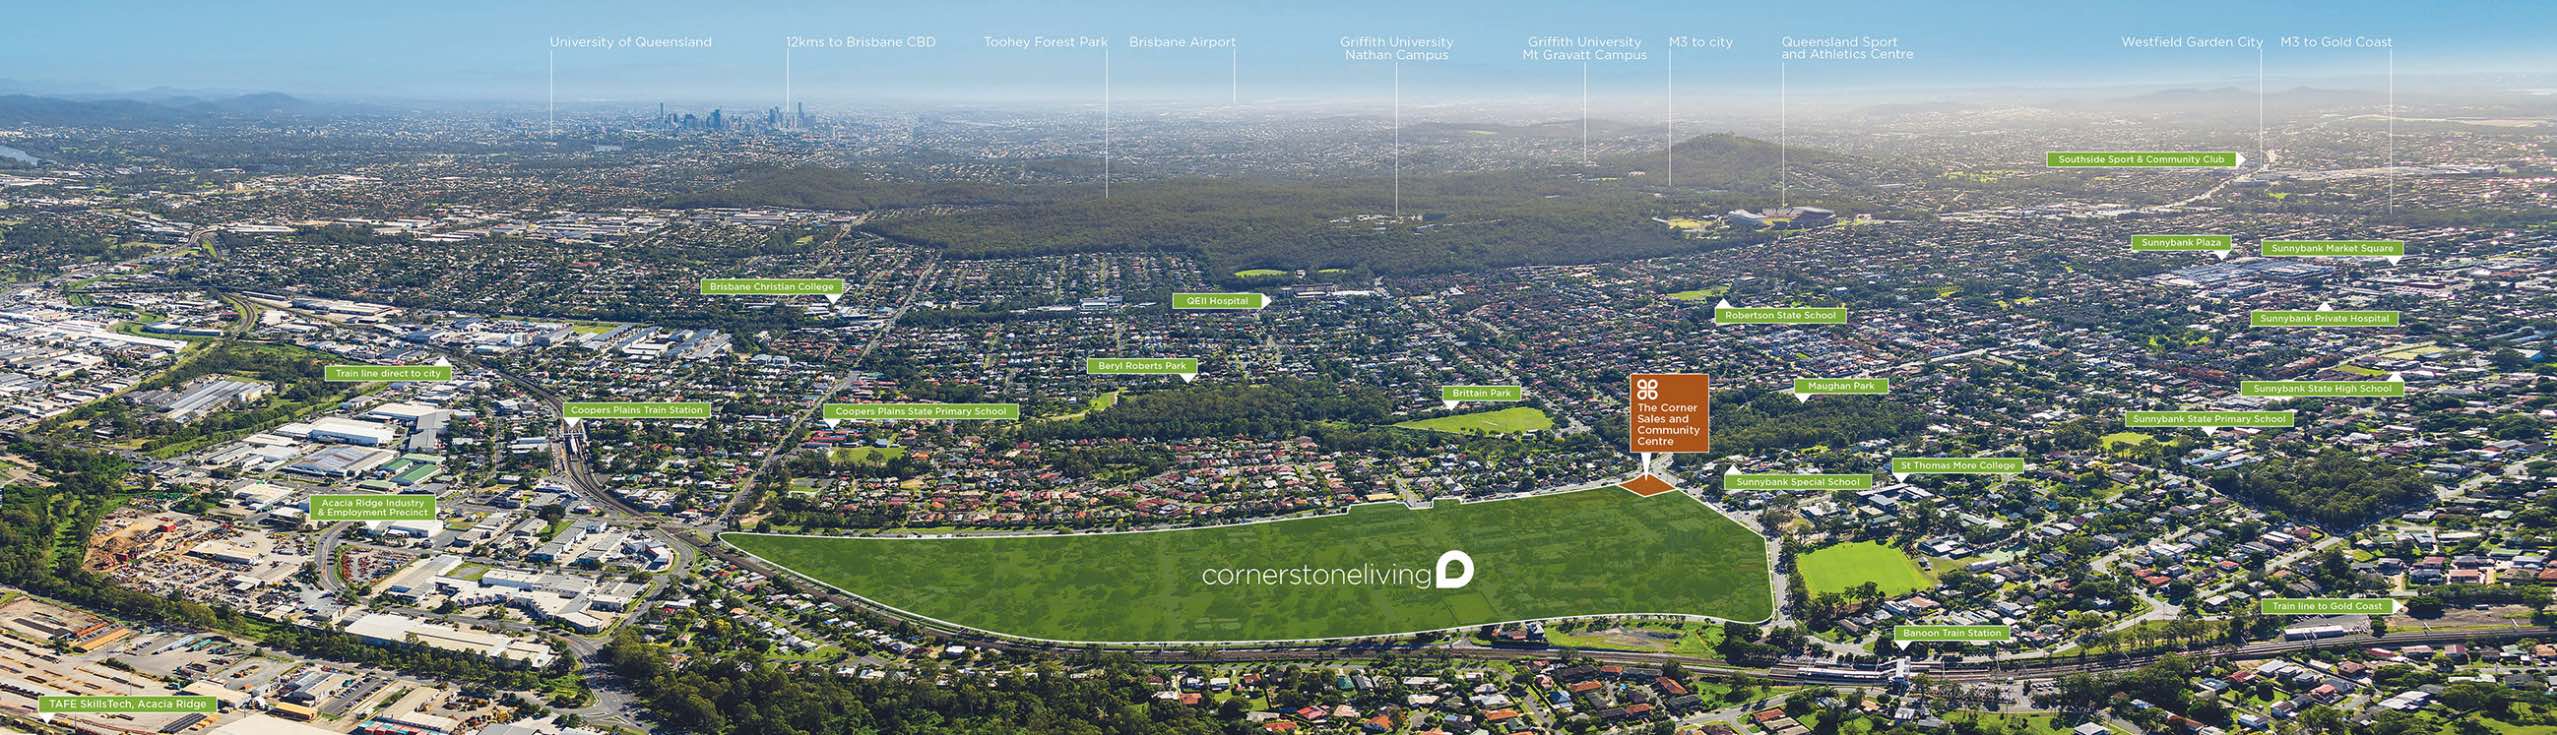 Cornerstone Living Estate - Coopers Plains Aerial